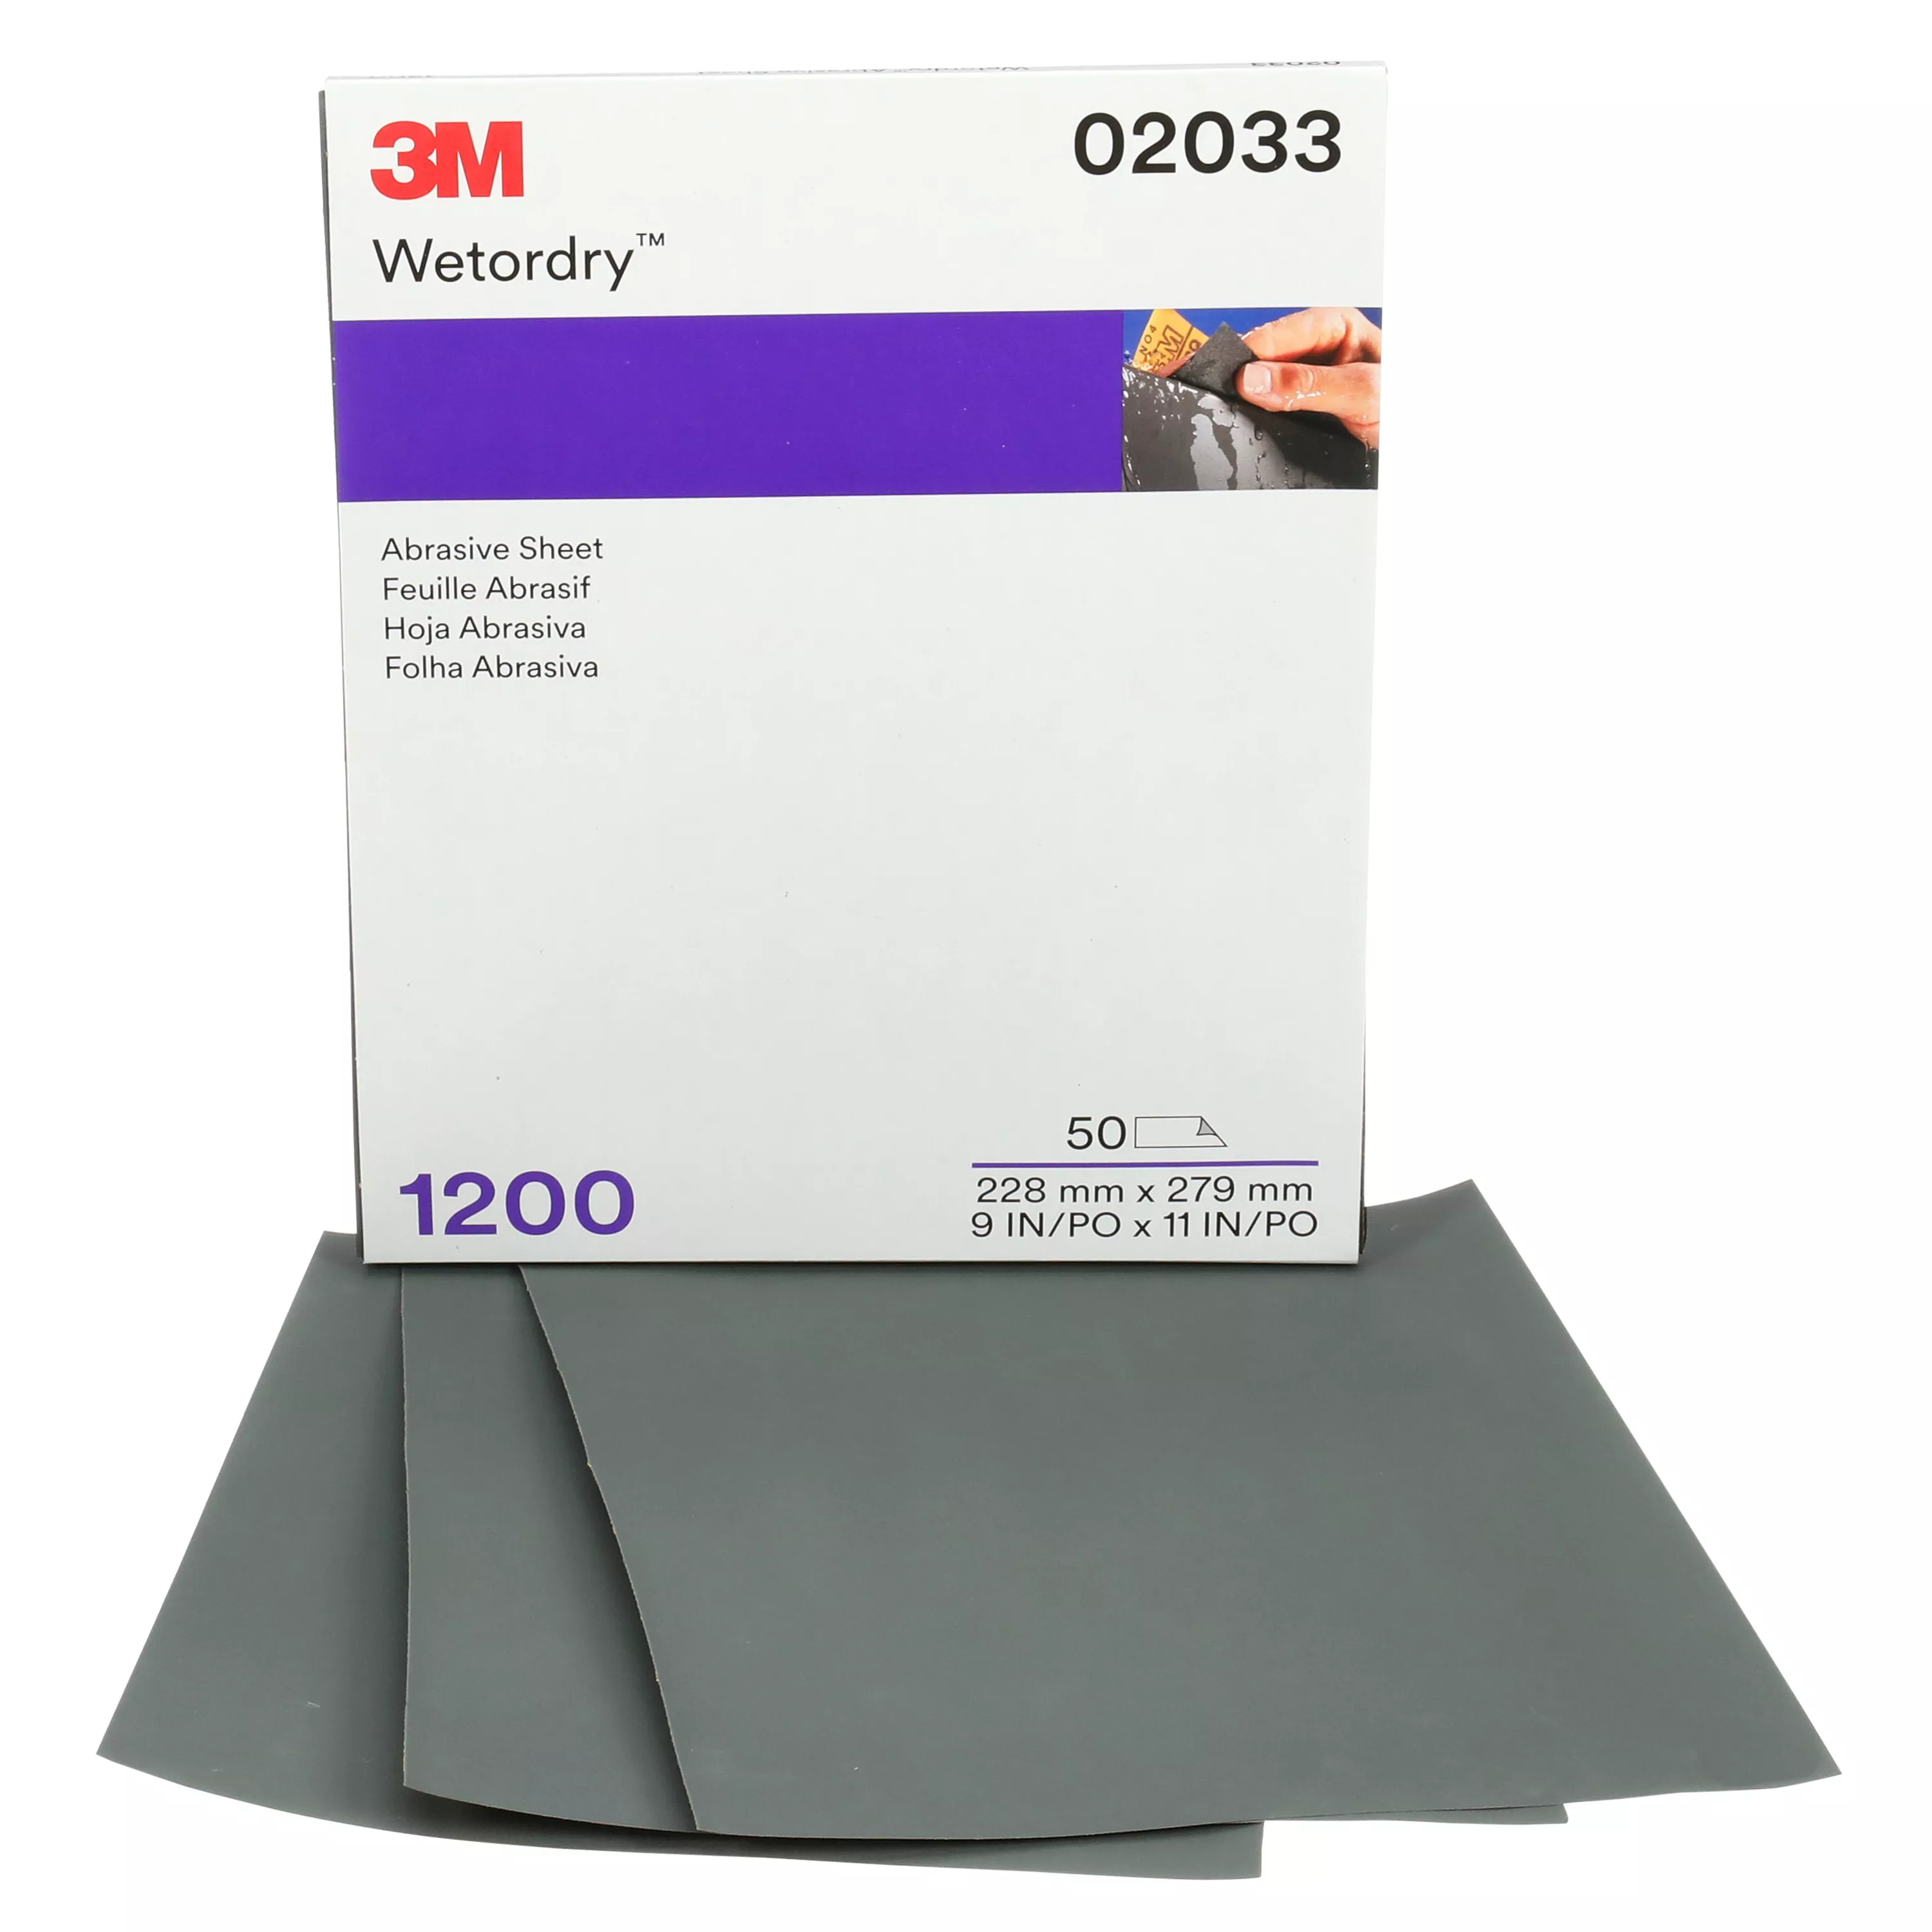 3M™ Wetordry™ Abrasive Sheet 401Q, 02033, 1200, 9 in x 11 in, 50 sheets
per carton, 5 cartons per case